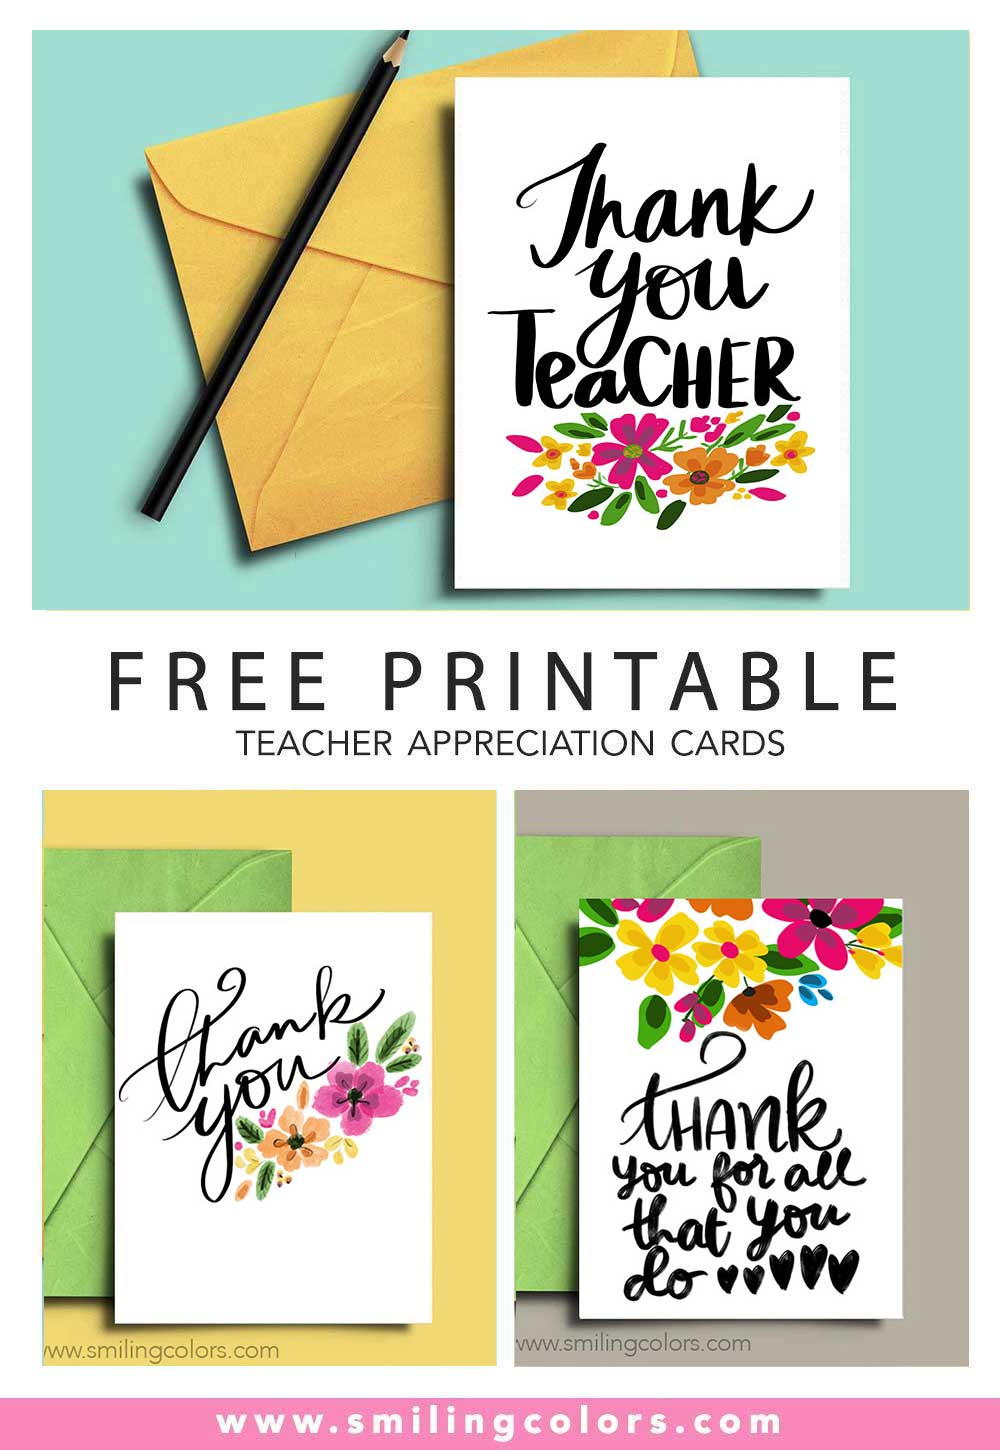 Thank You Teacher: A Set of Free Printable Note Cards FaveCrafts com